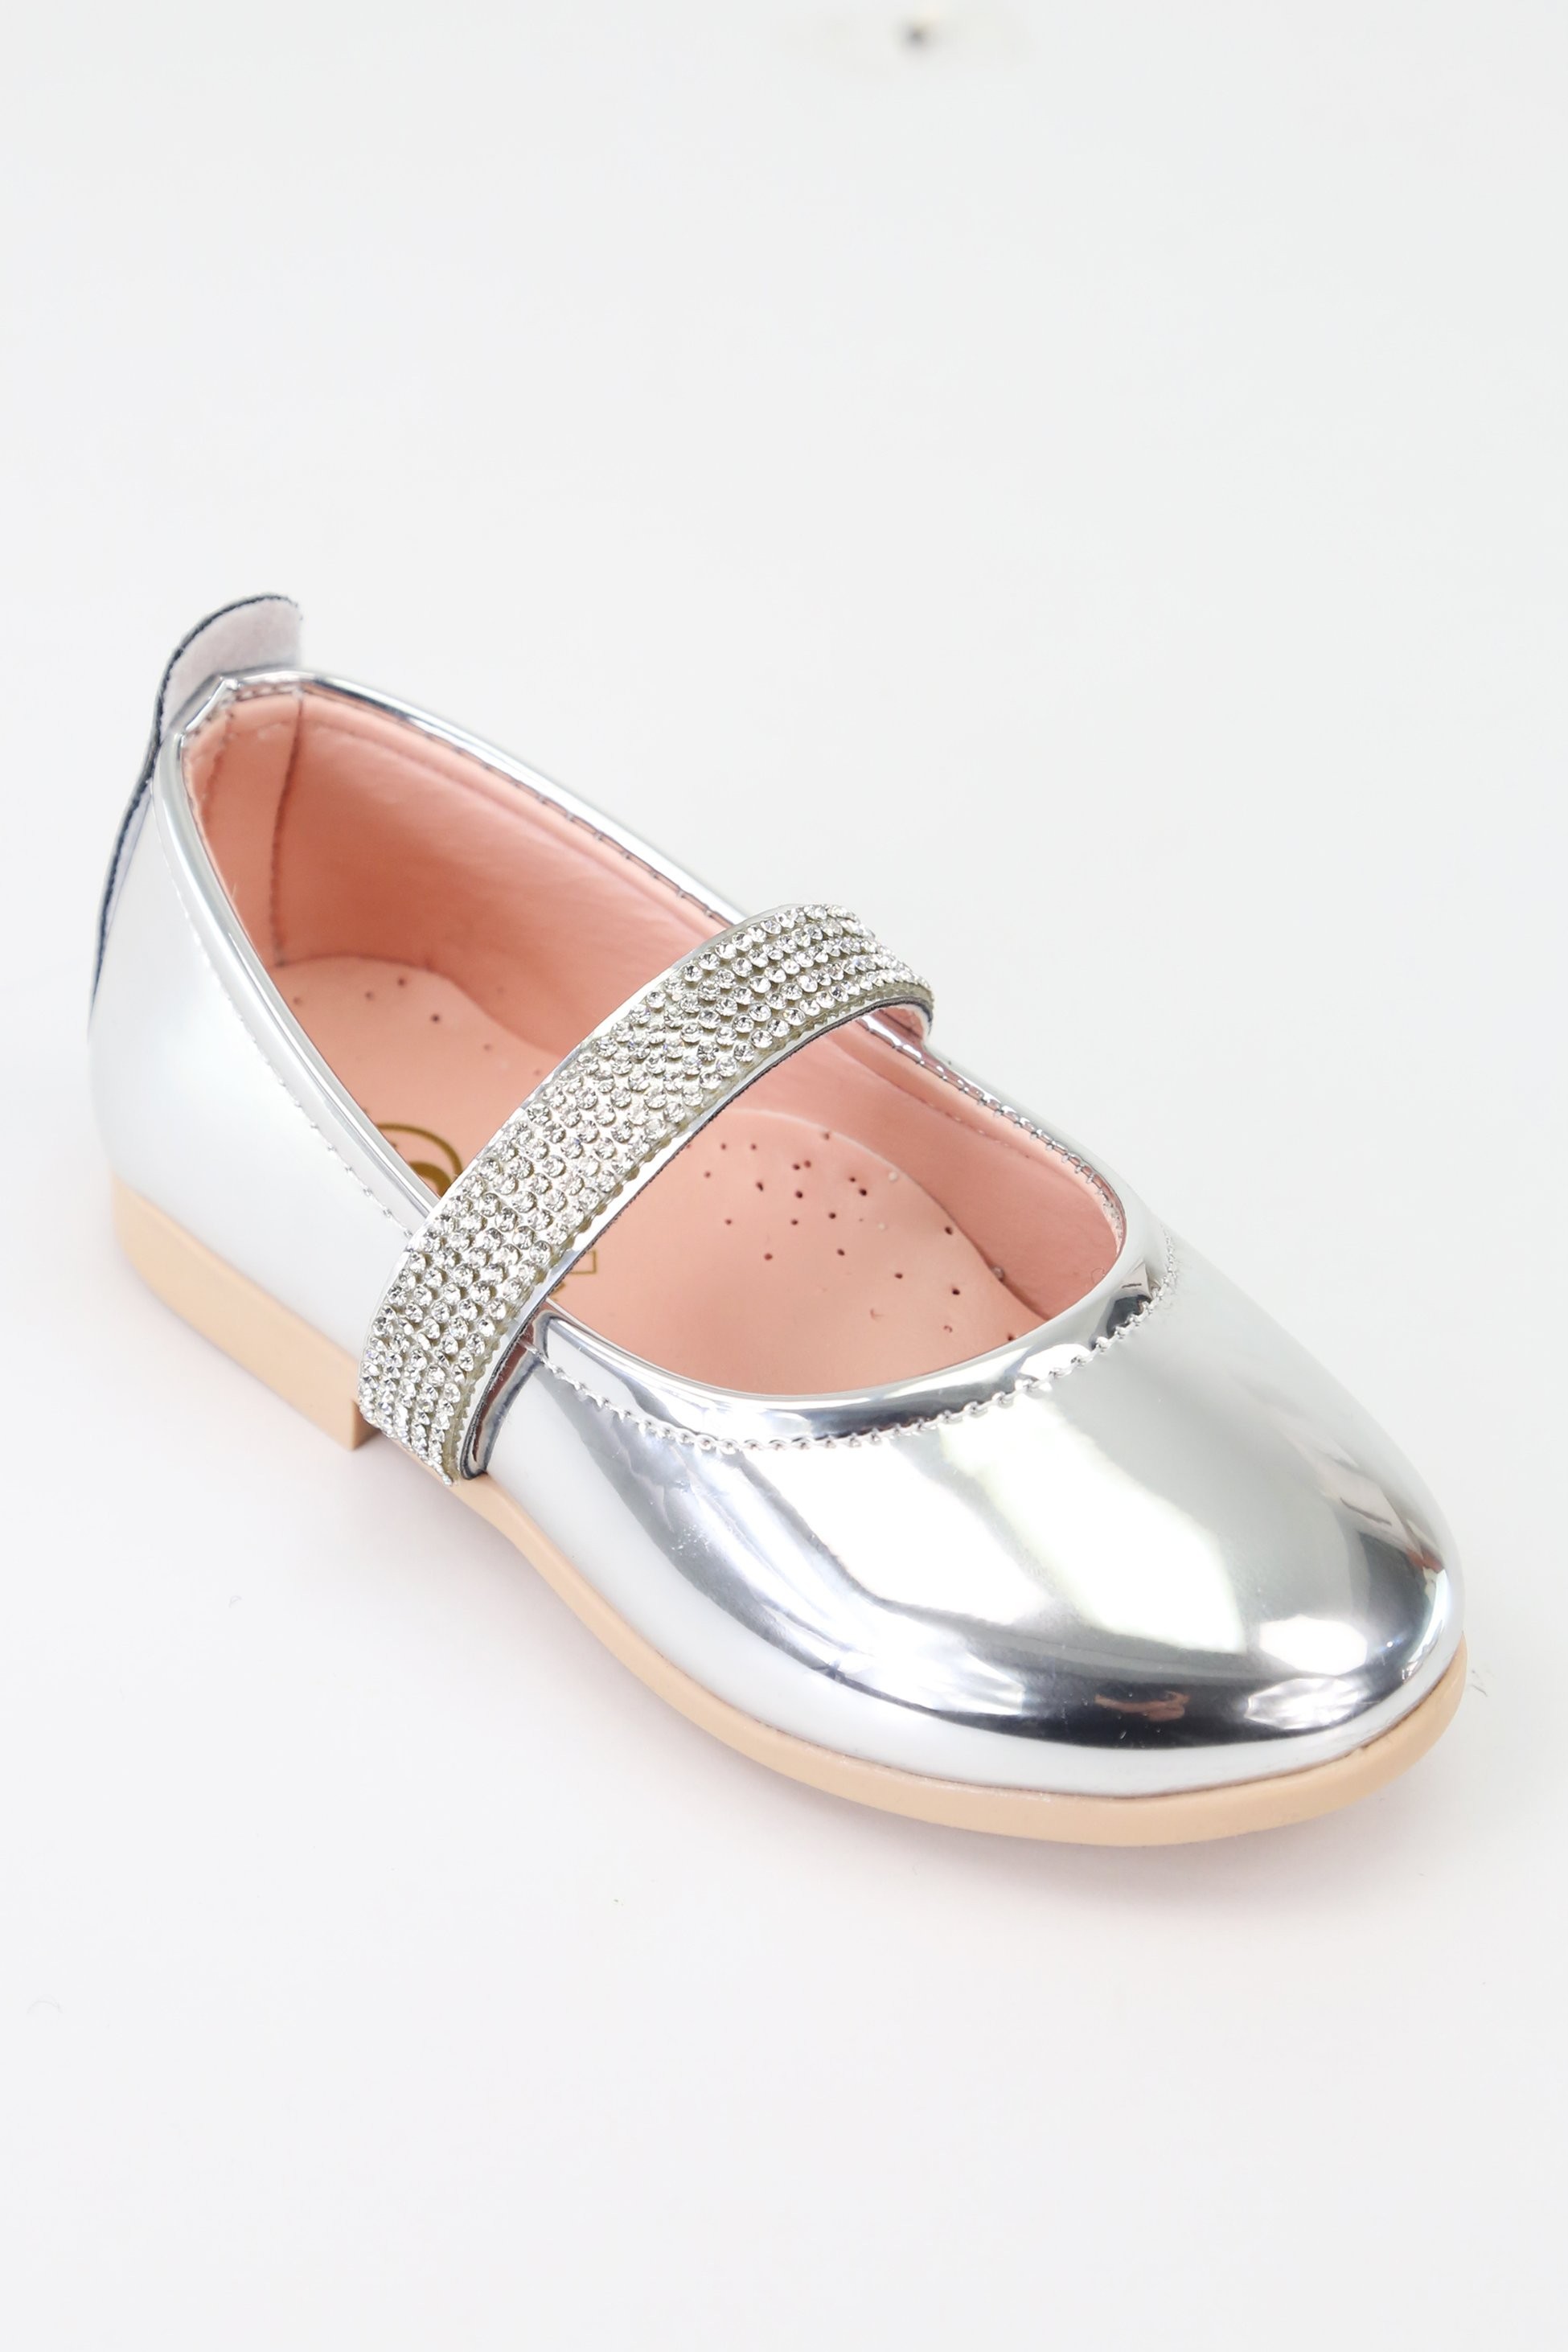 Girls Rhinestone Patent Mary Jane Shoes - ARWEN - Silver